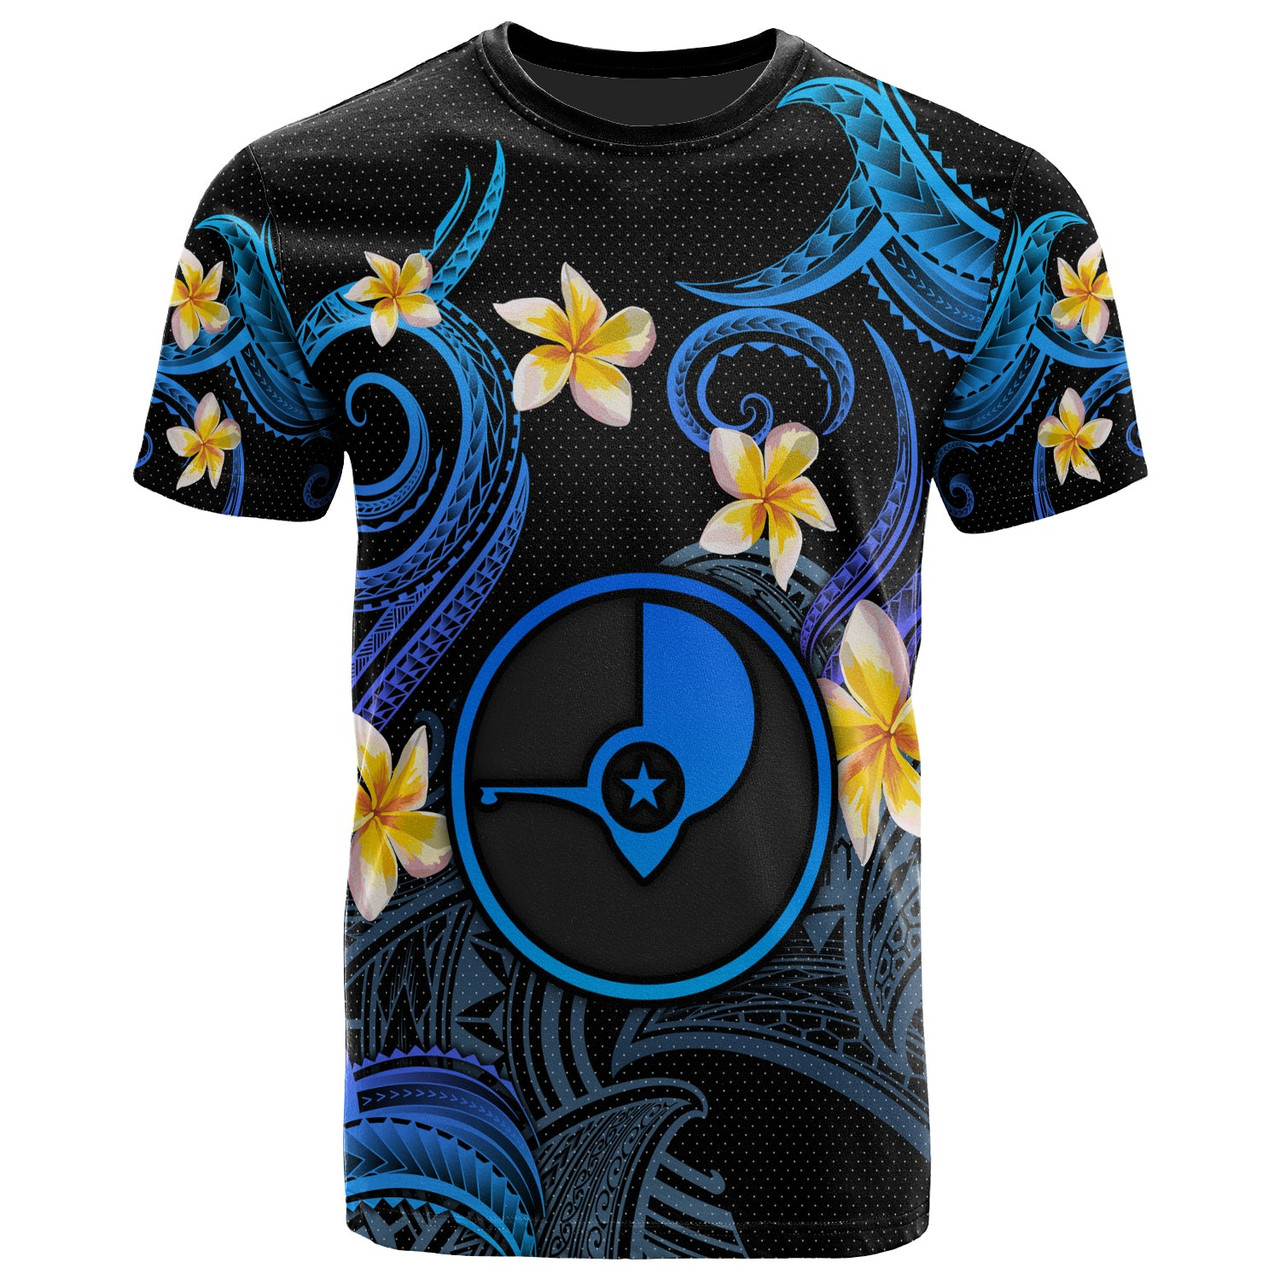 Yap T-shirt - Custom Personalised Polynesian Waves with Plumeria Flowers (Blue)